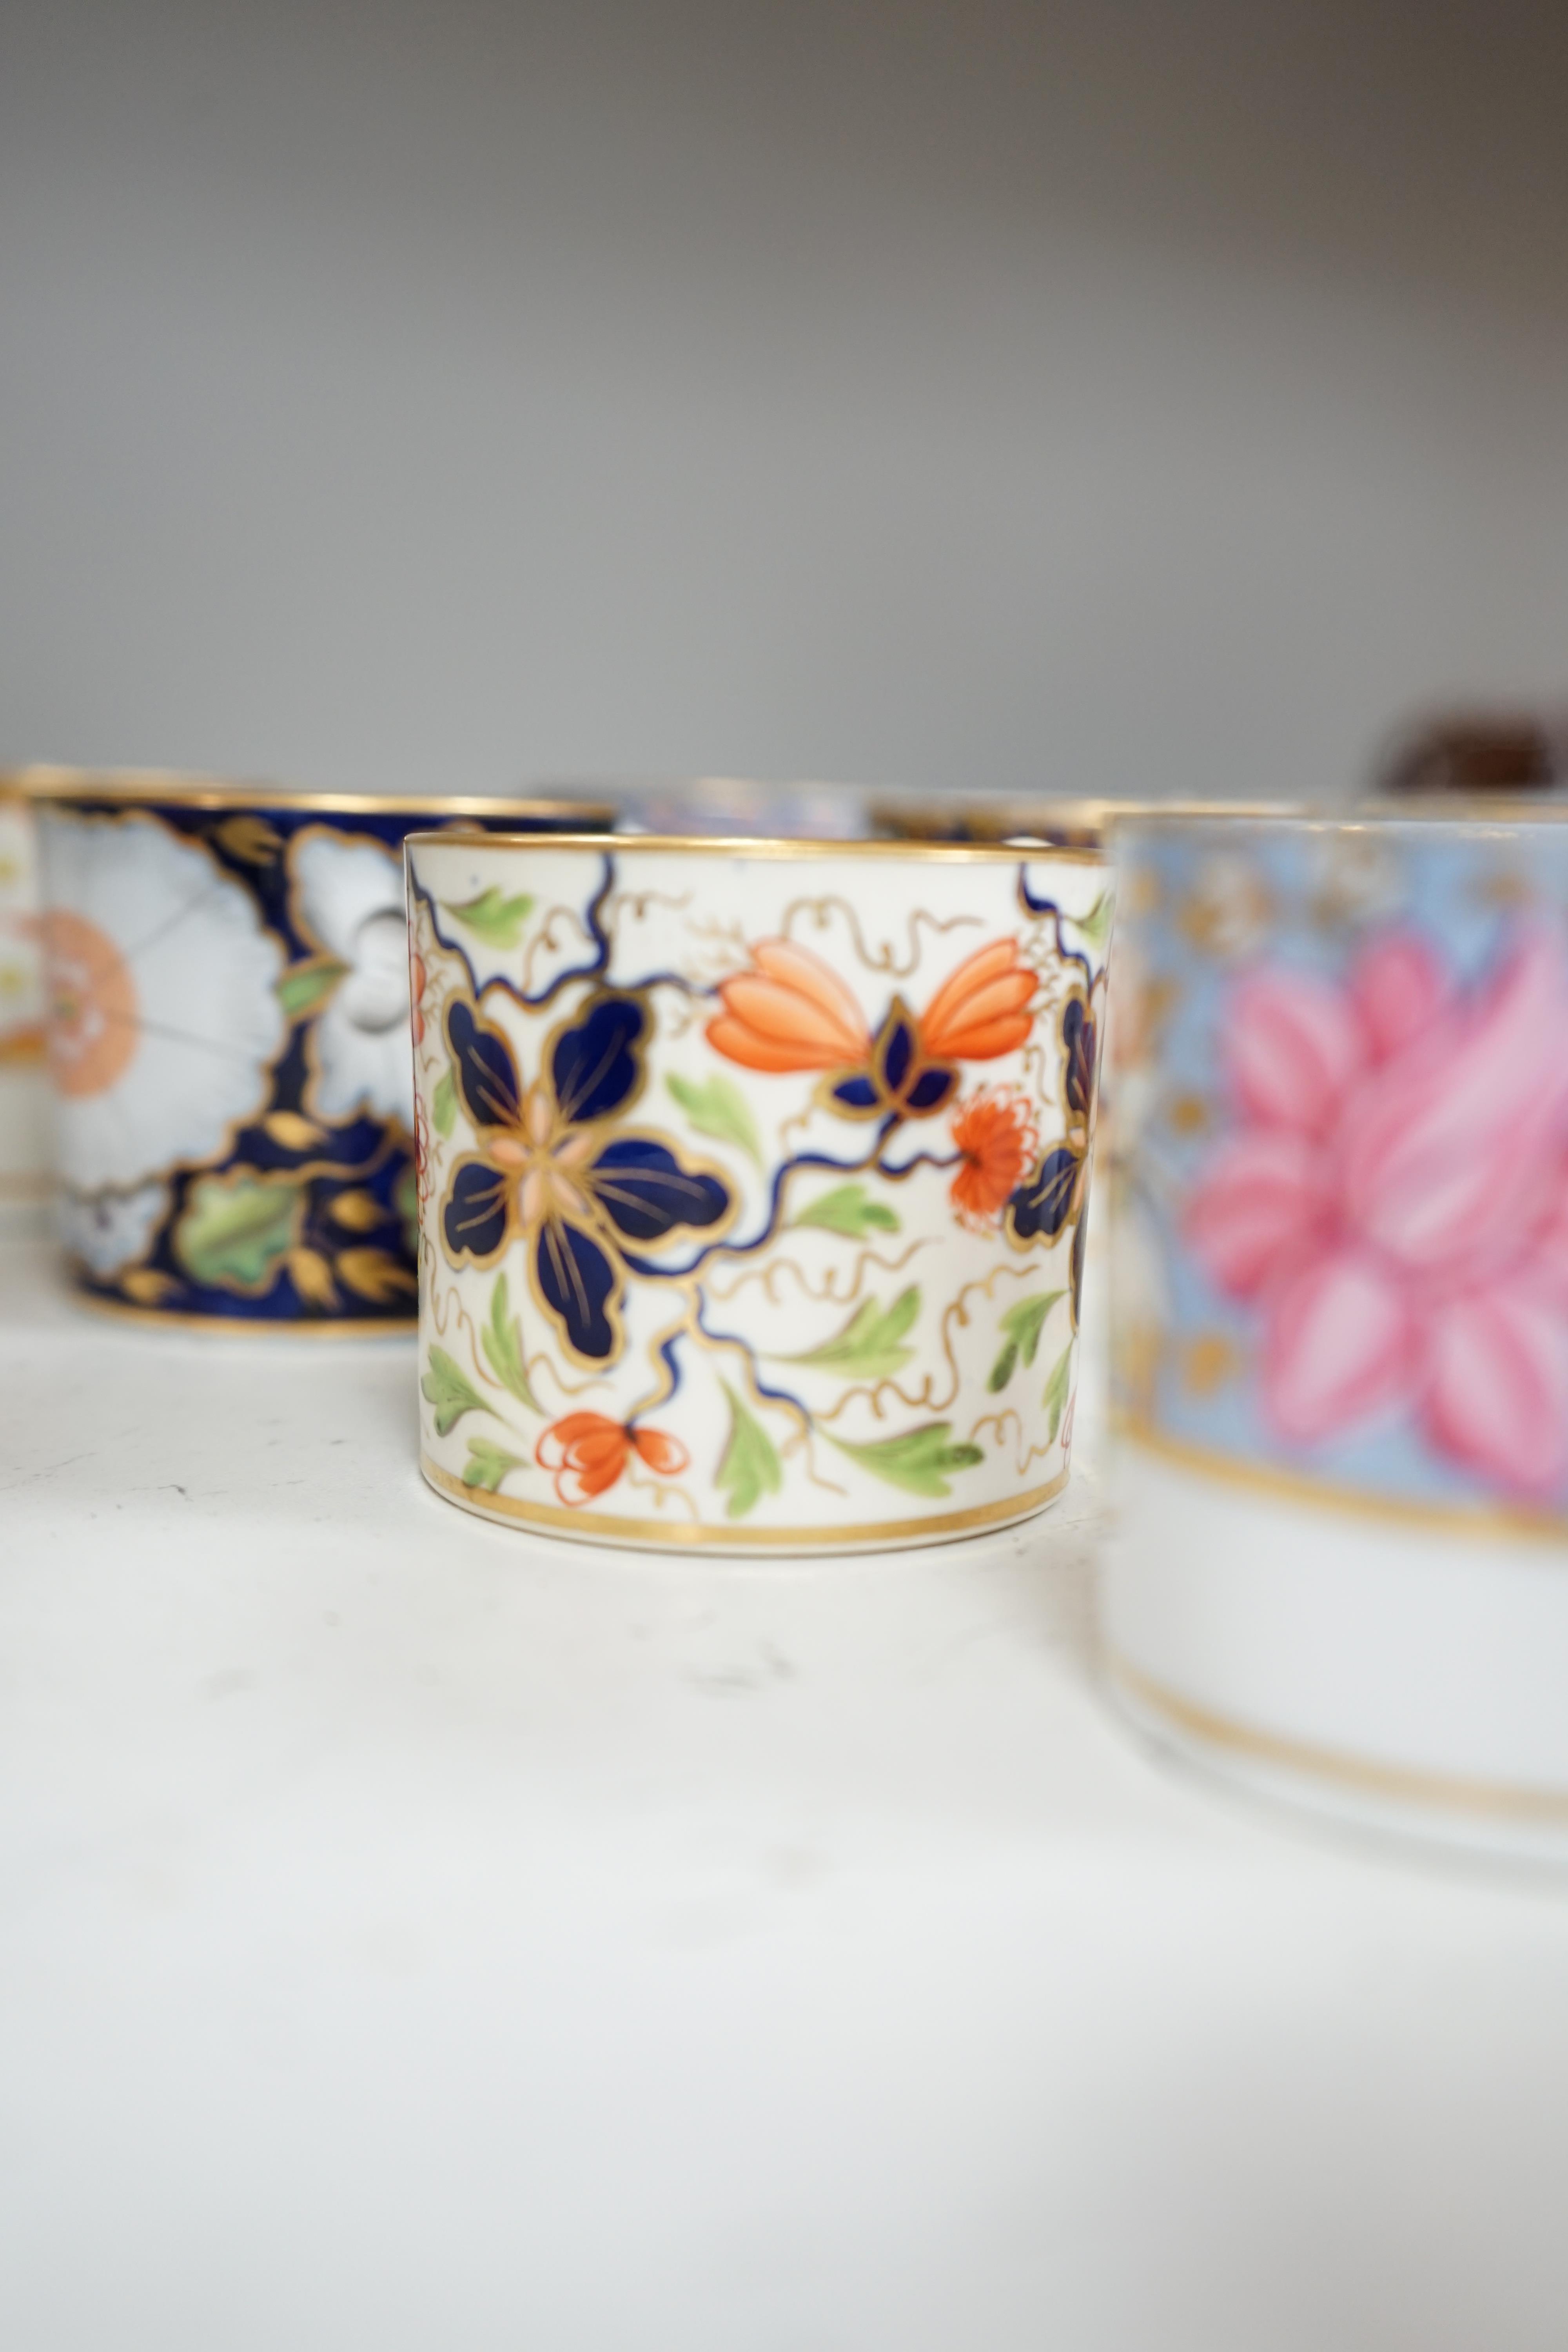 Twelve 1800-1820 English porcelain floral designed coffee cans